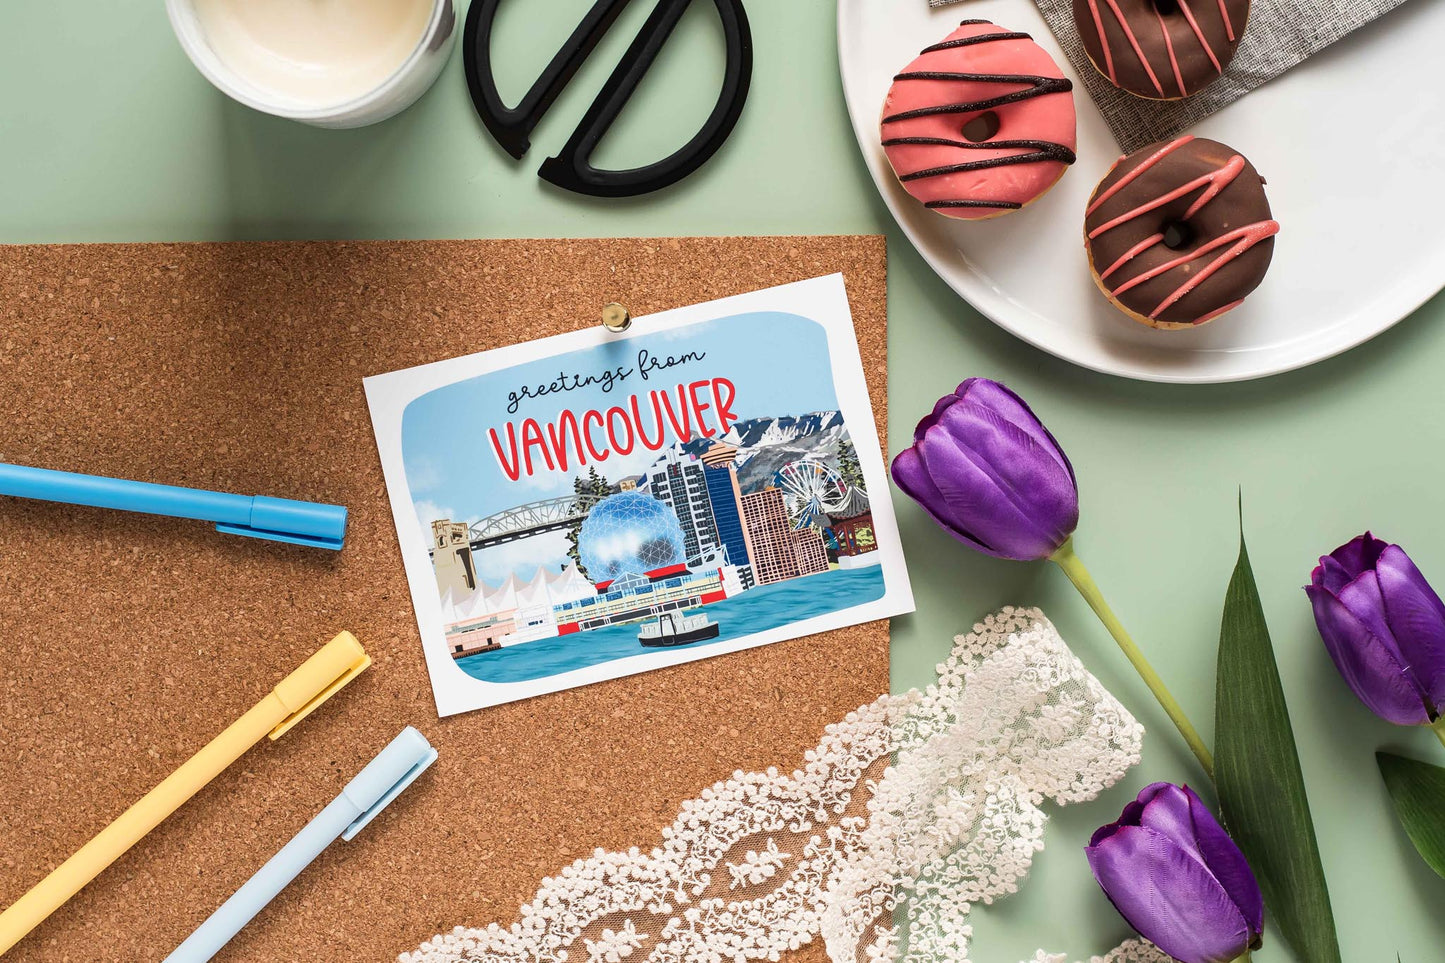 Vancouver, BC Postcard